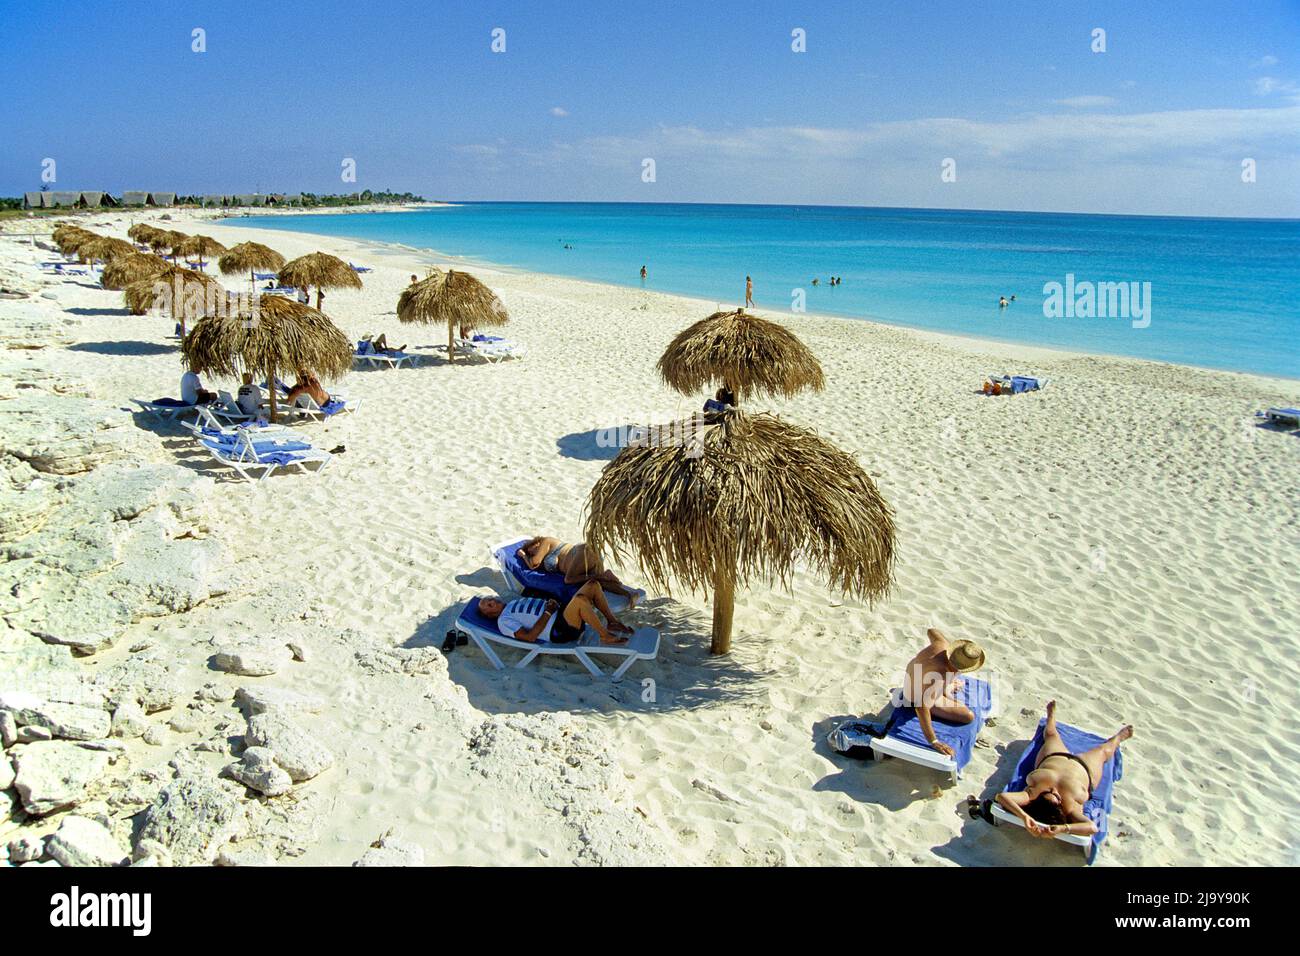 Touristen unter Sonnenschutzschirmen am Strand bei Cayo Largo, Kuba, Karibik | turisti sotto ombrelloni alla spiaggia di Cayo Largo, Cuba, Caribe Foto Stock